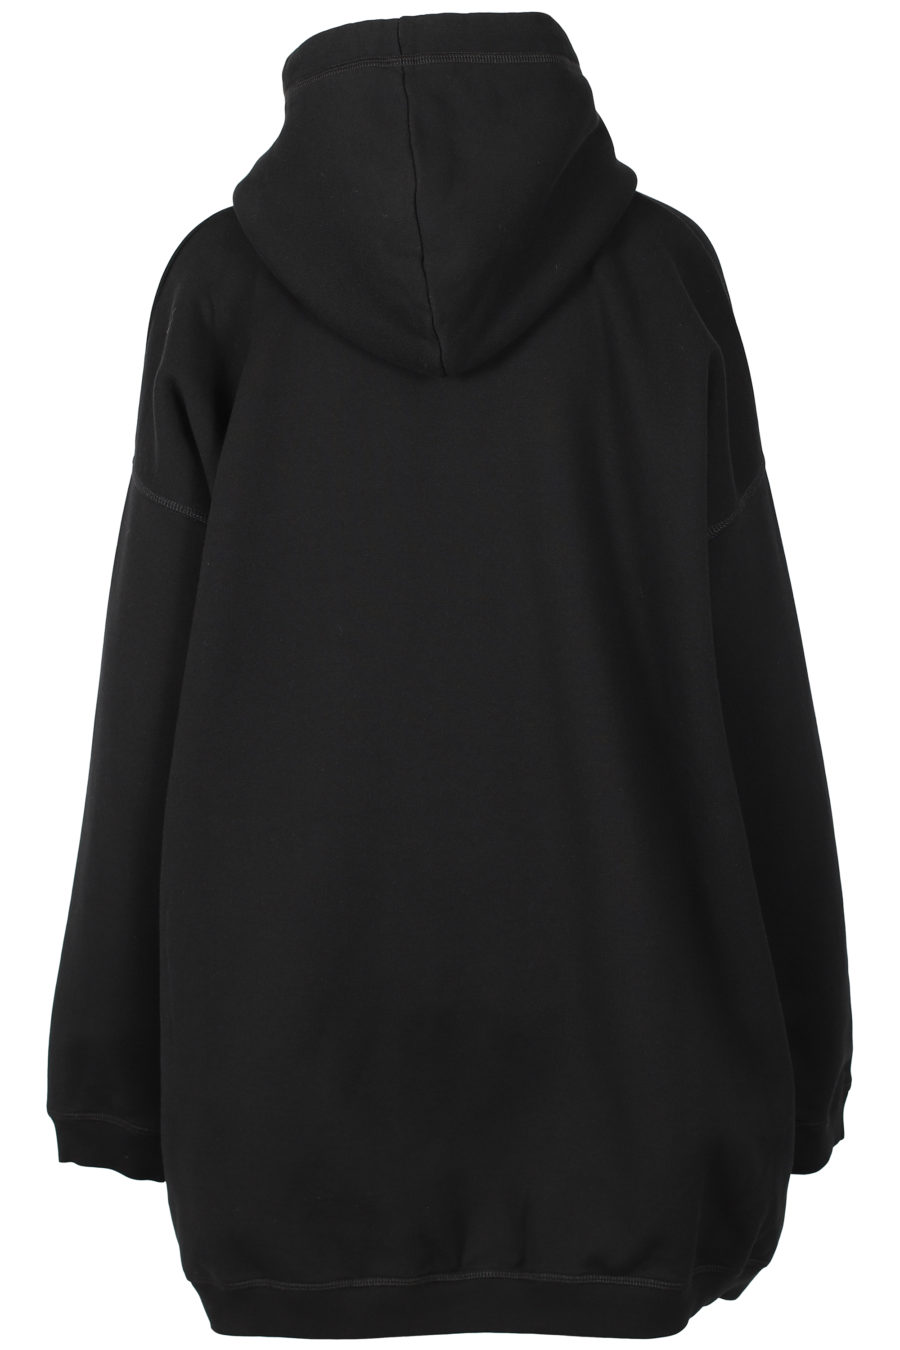 Black sweatshirt dress with white logo - IMG 3253